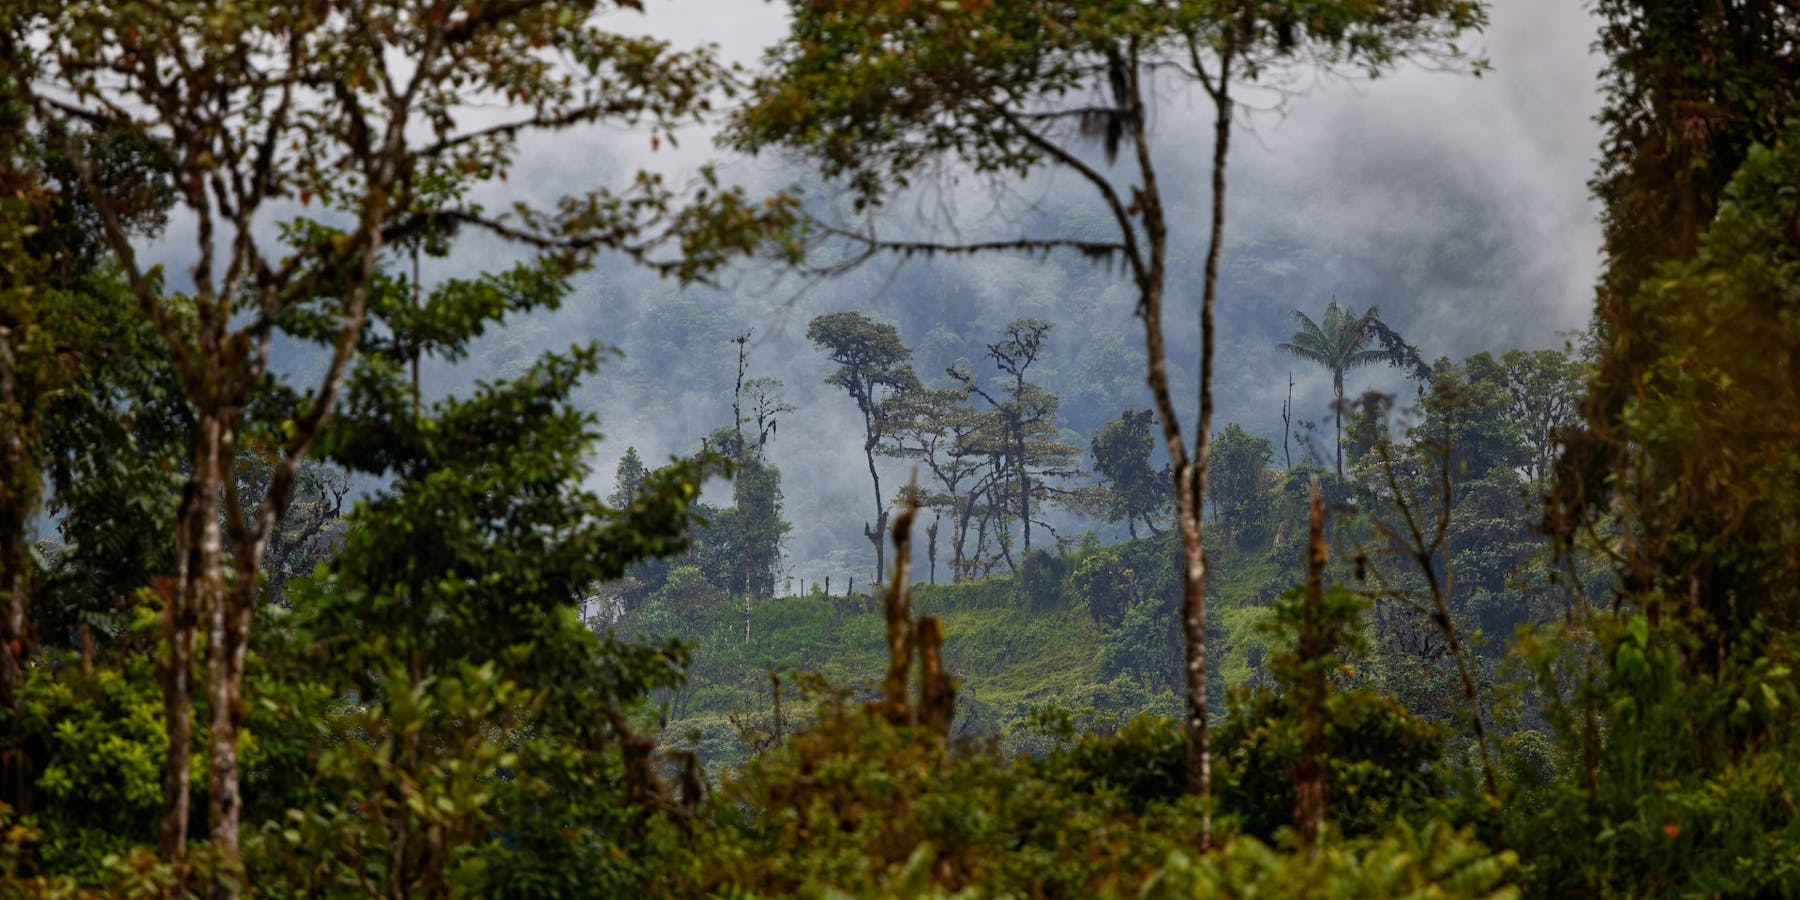 Amazon rainforest, Ecuador